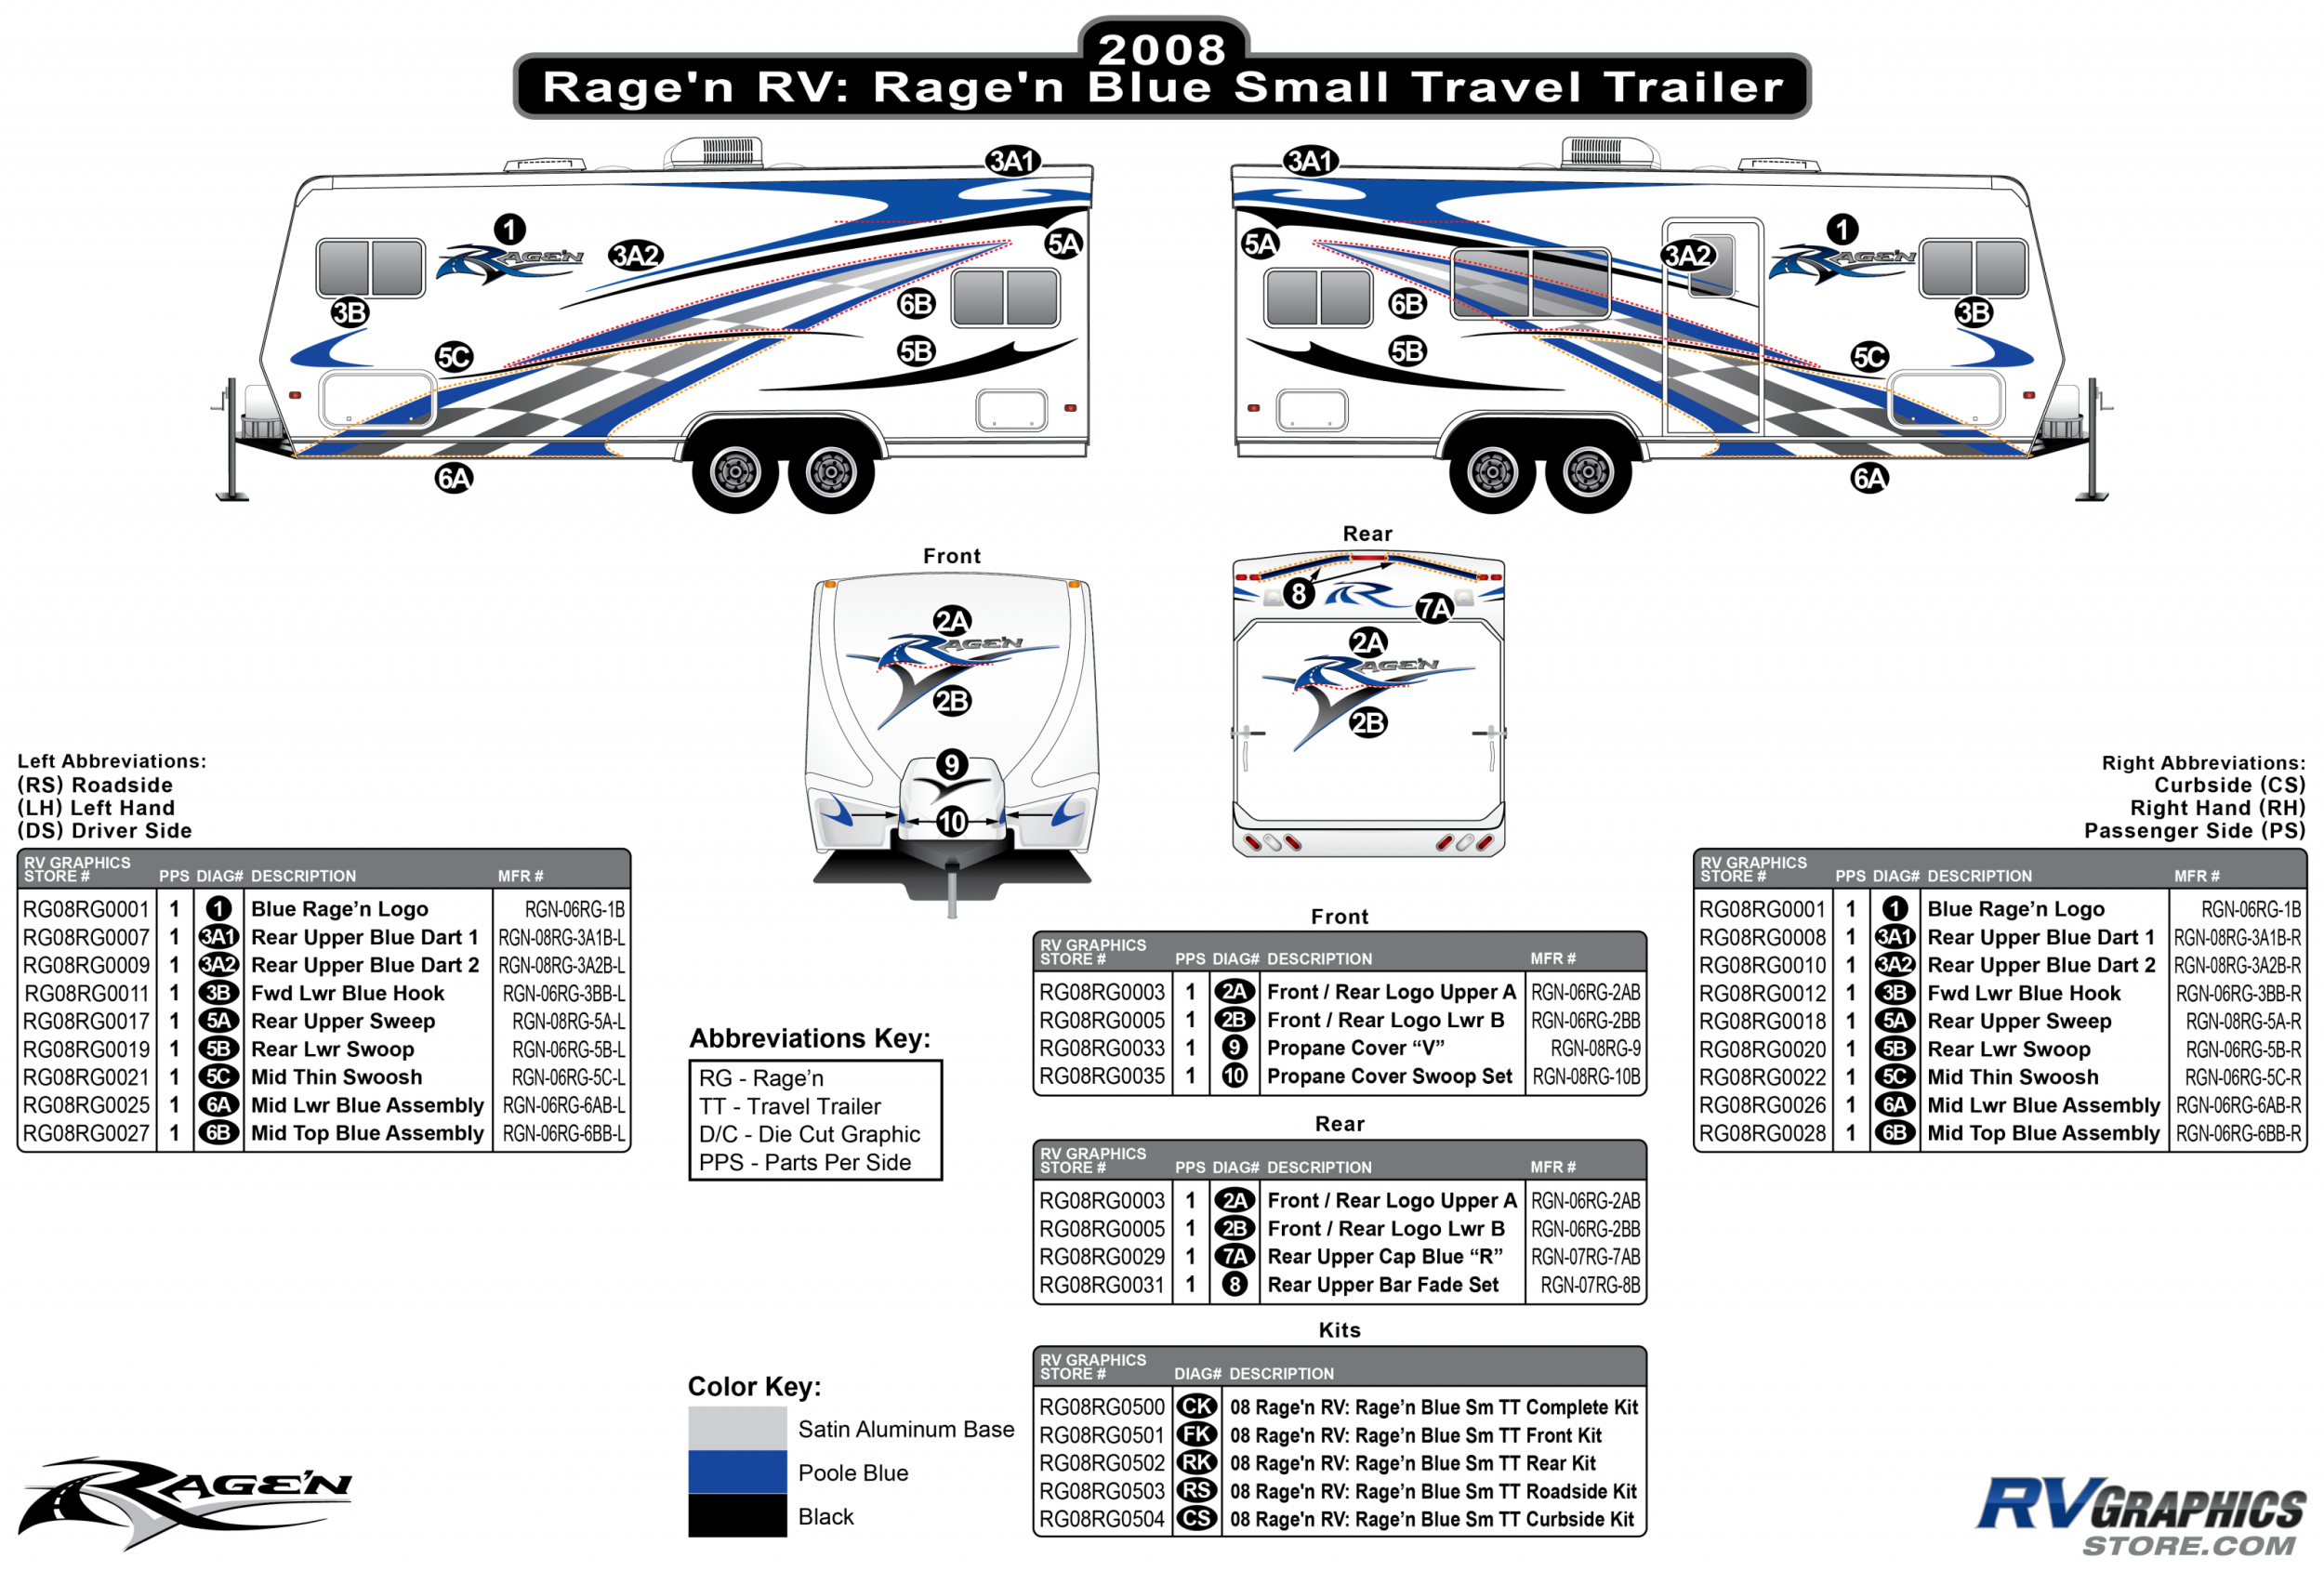 Ragen - 2008 Ragen  Small TT-Travel Trailer 21-26 Blue